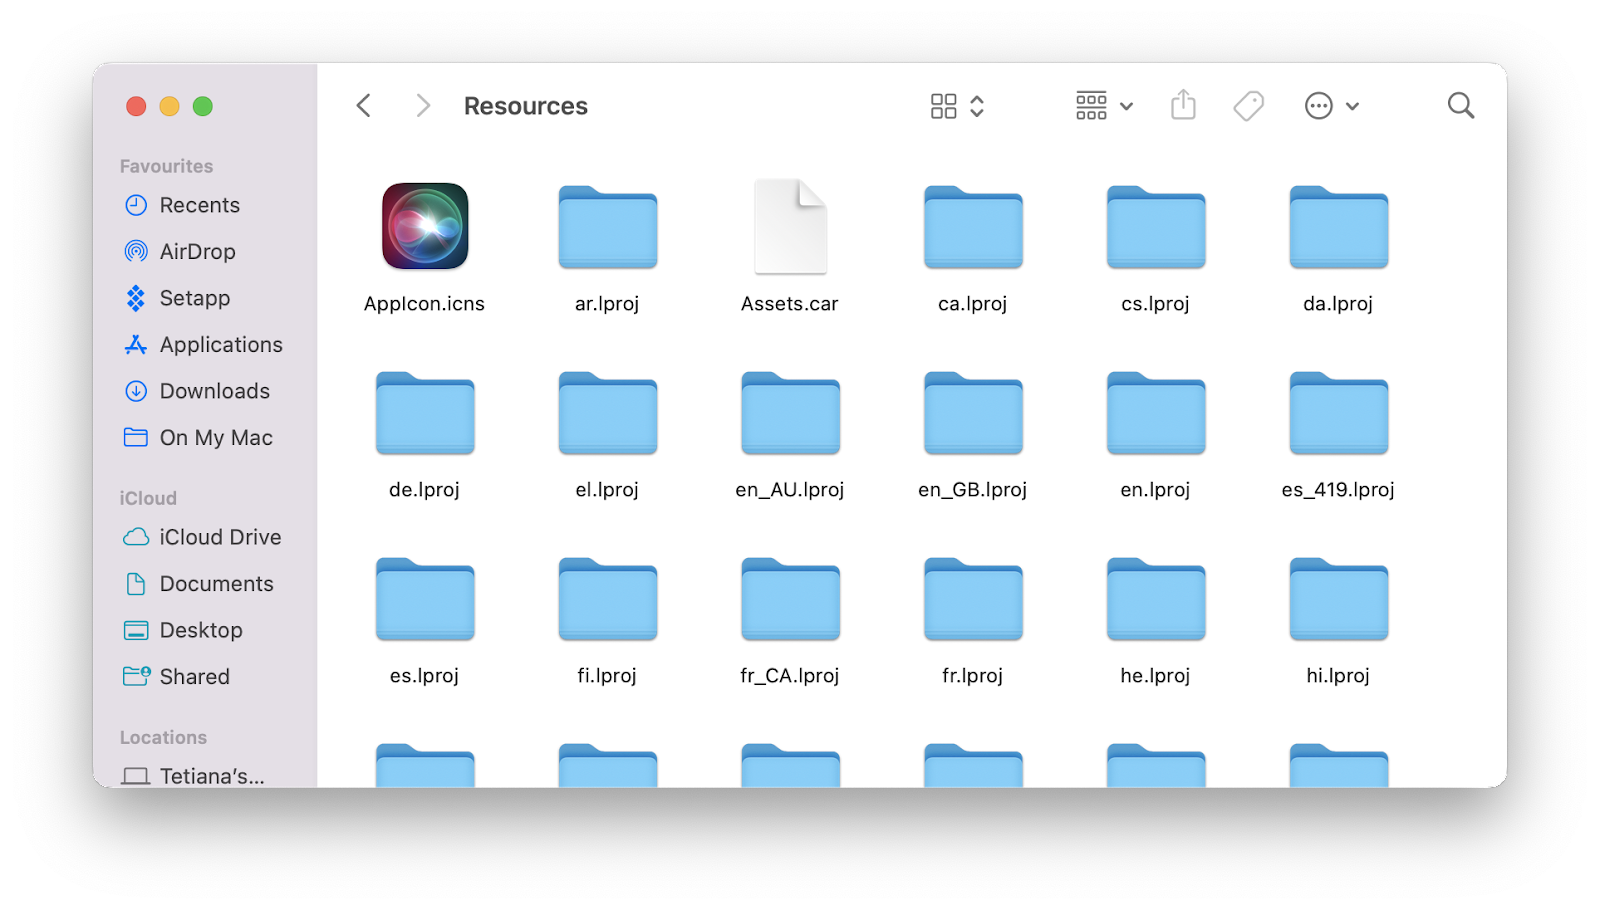 delete language files mac